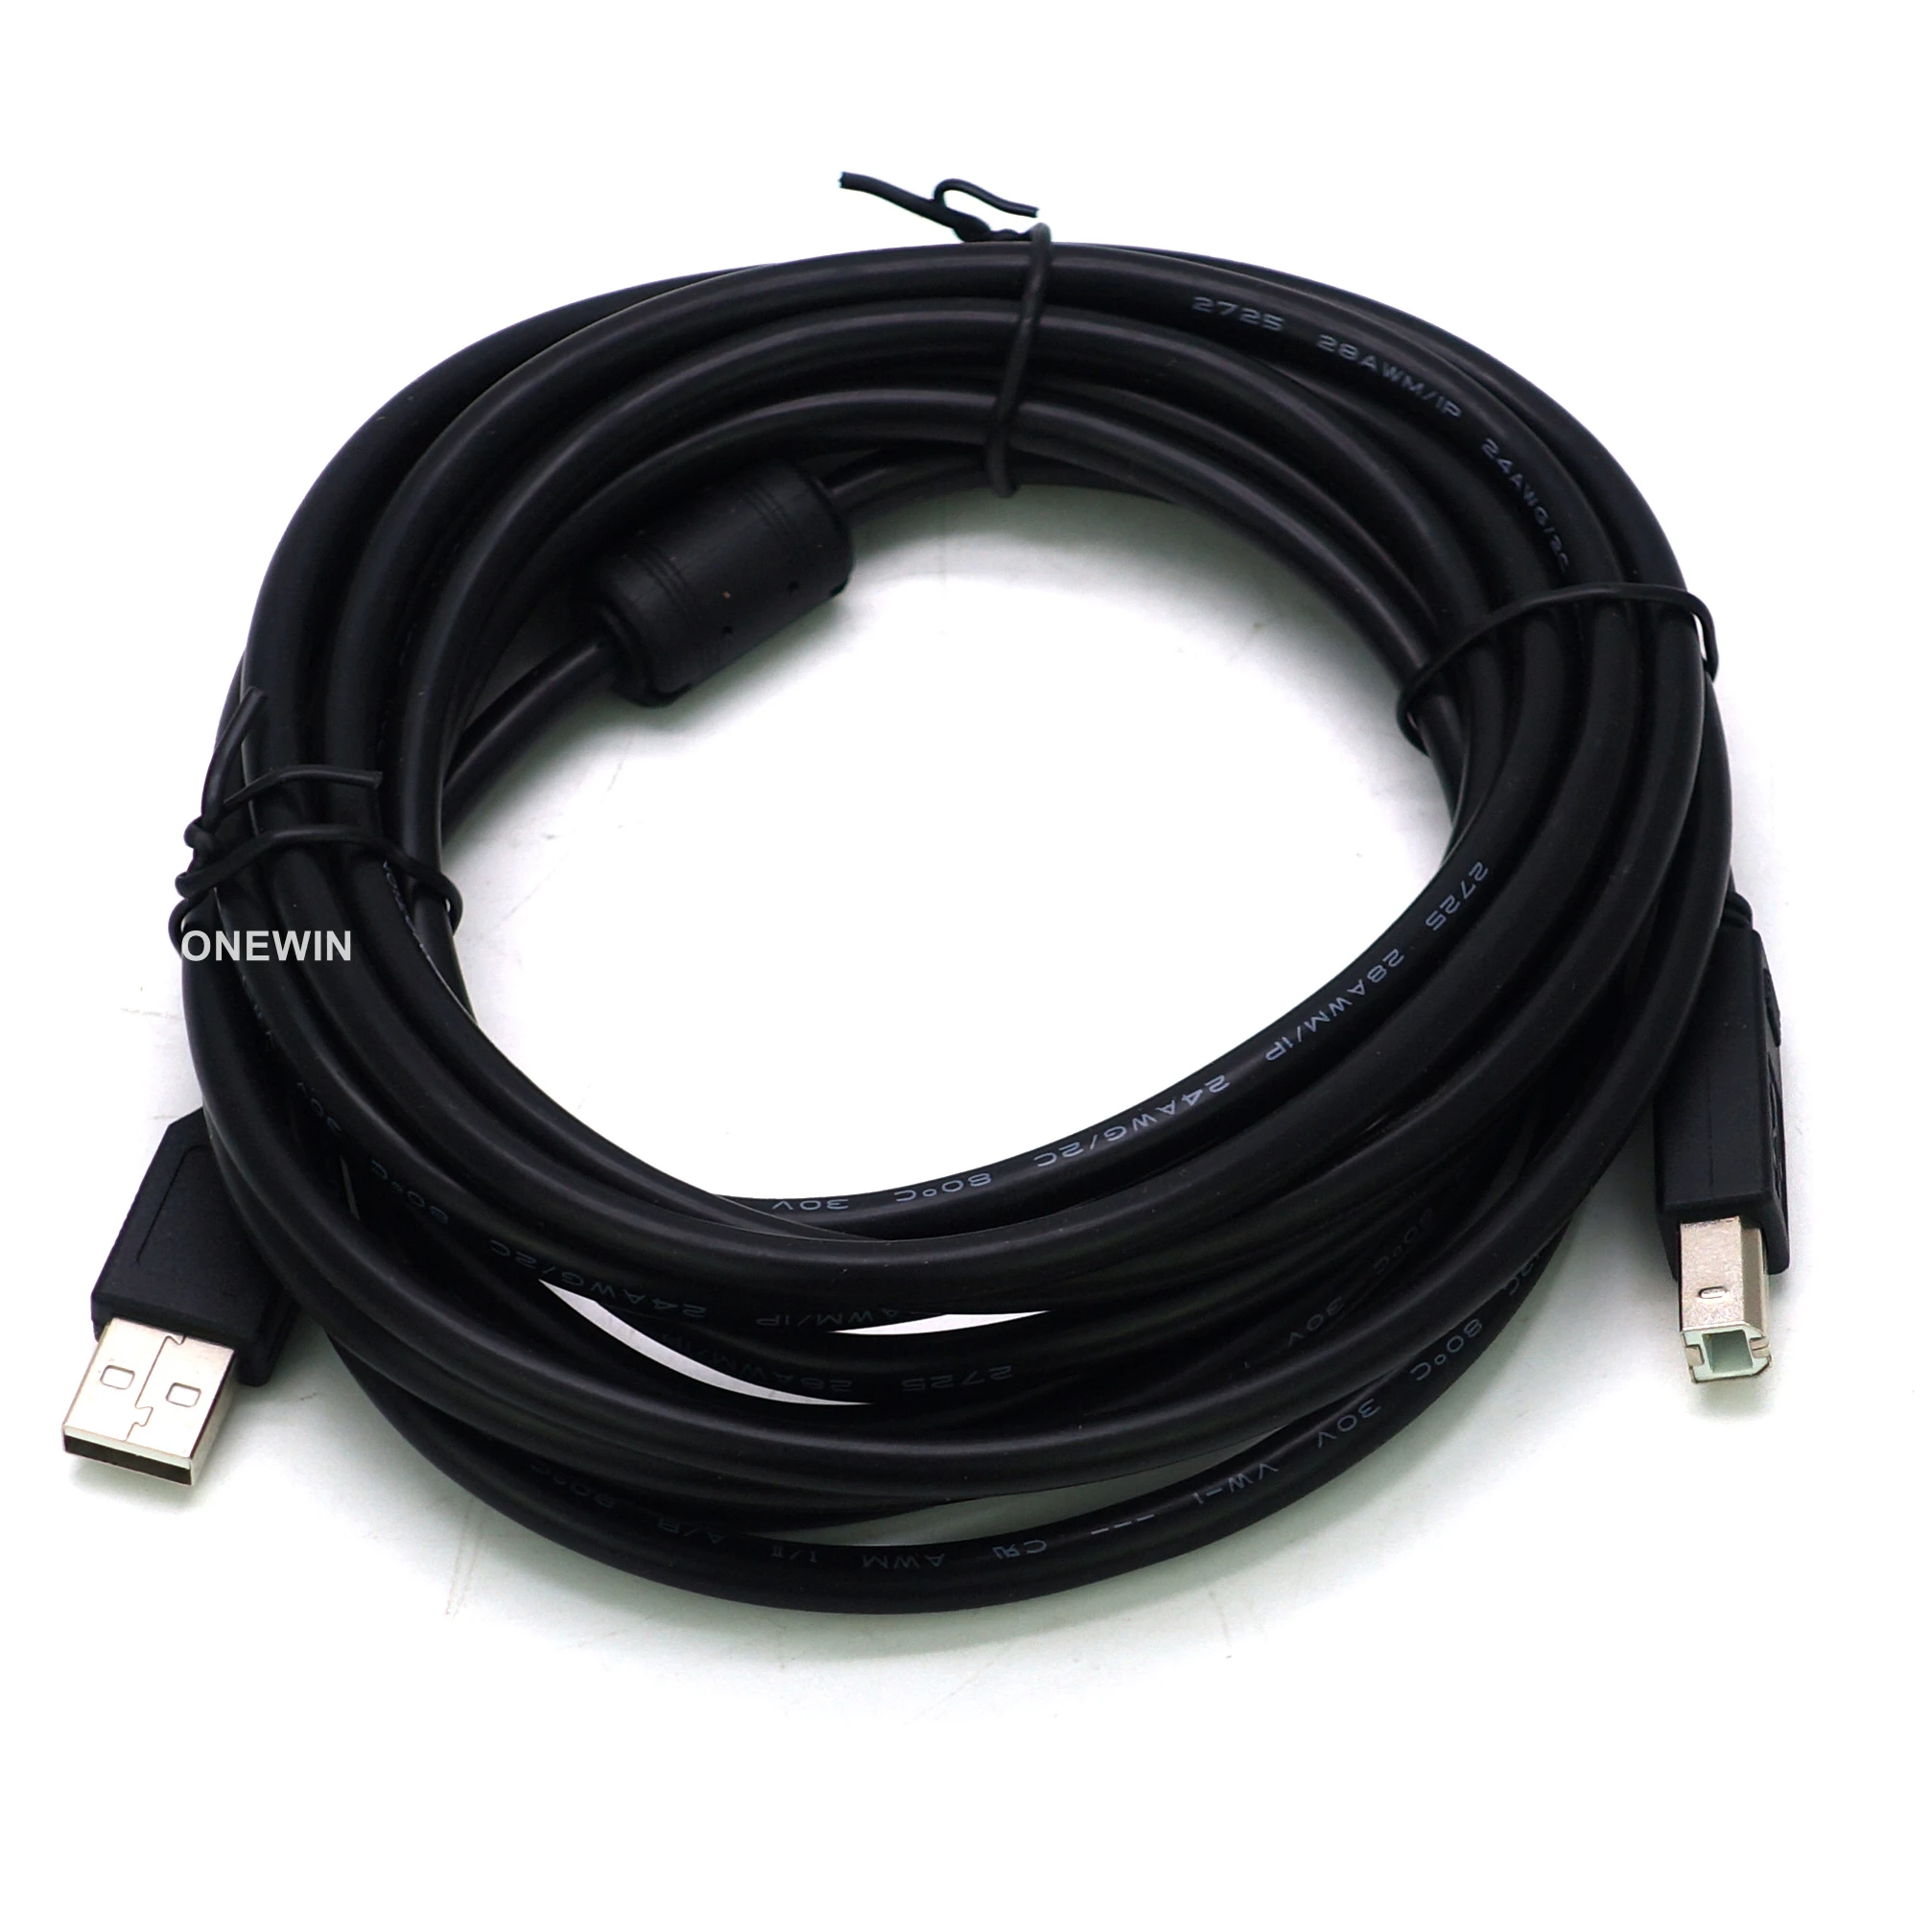 Programare PLC Cablu Compatibil Siemens S7-200/300/400 6ES7972-0CB20-0XA0 USB-MPI Izolate MPI/PPI/DP/PROFIBUS Adaptor USB